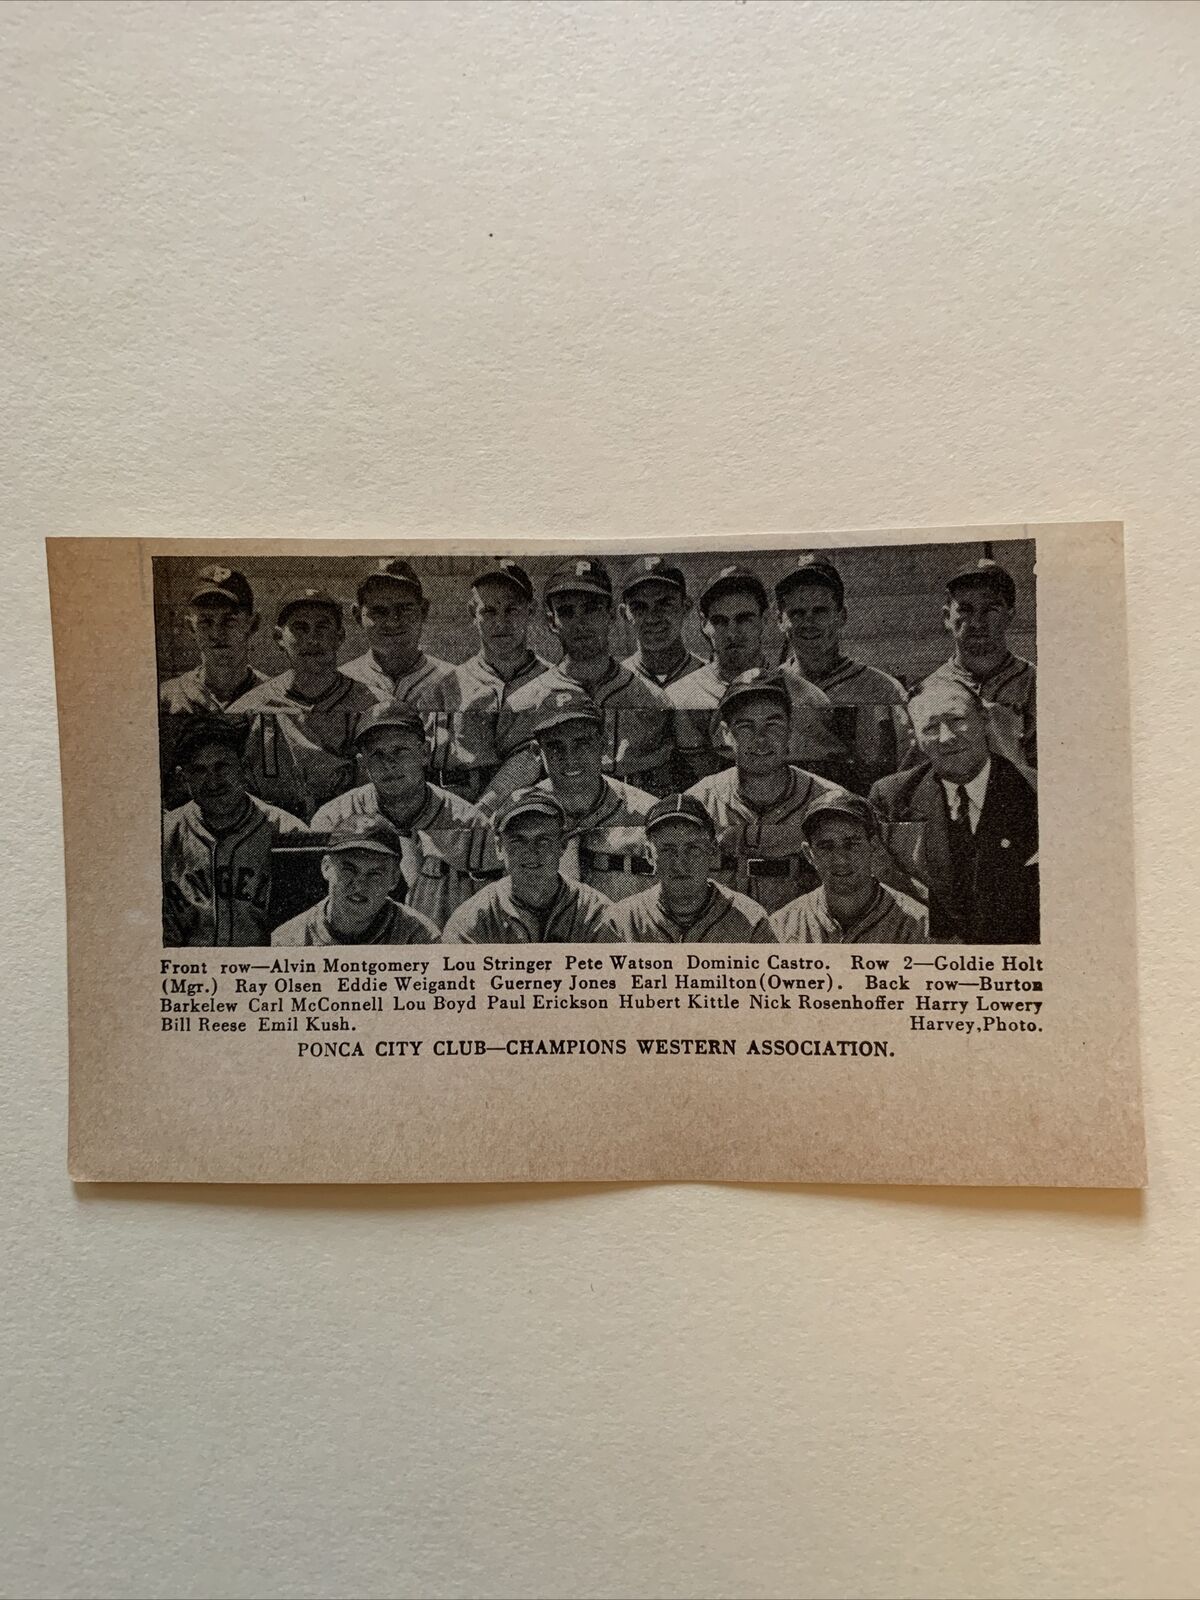 Ponca City Angels Peanuts Lowrey Emil Kush P Erickson 1938 Baseball Team Picture